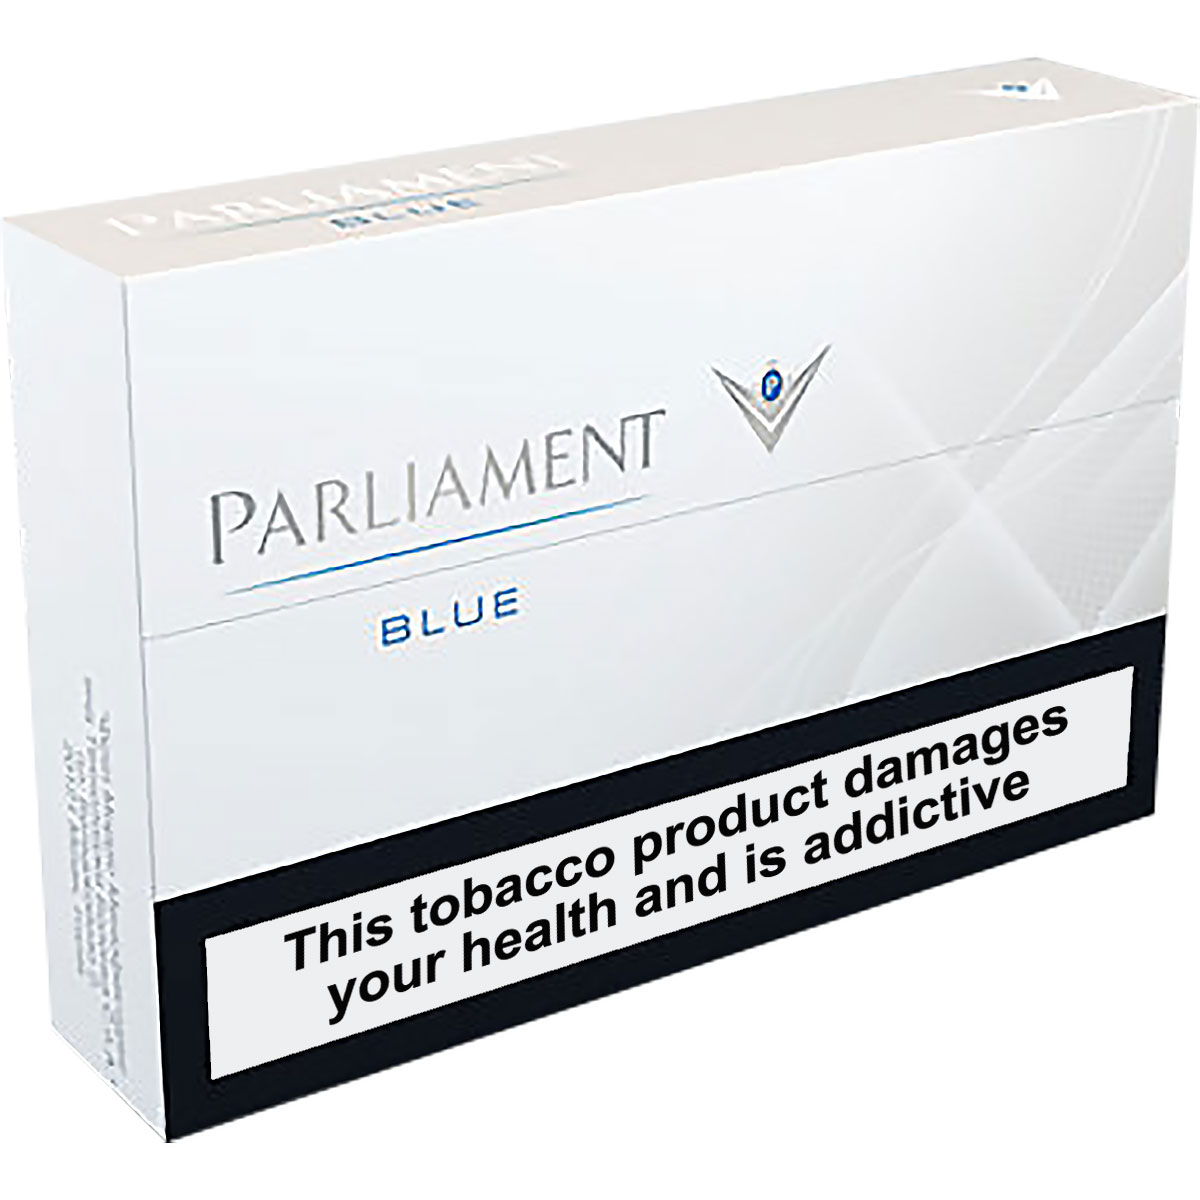 Parliament - Blue (1 pack)